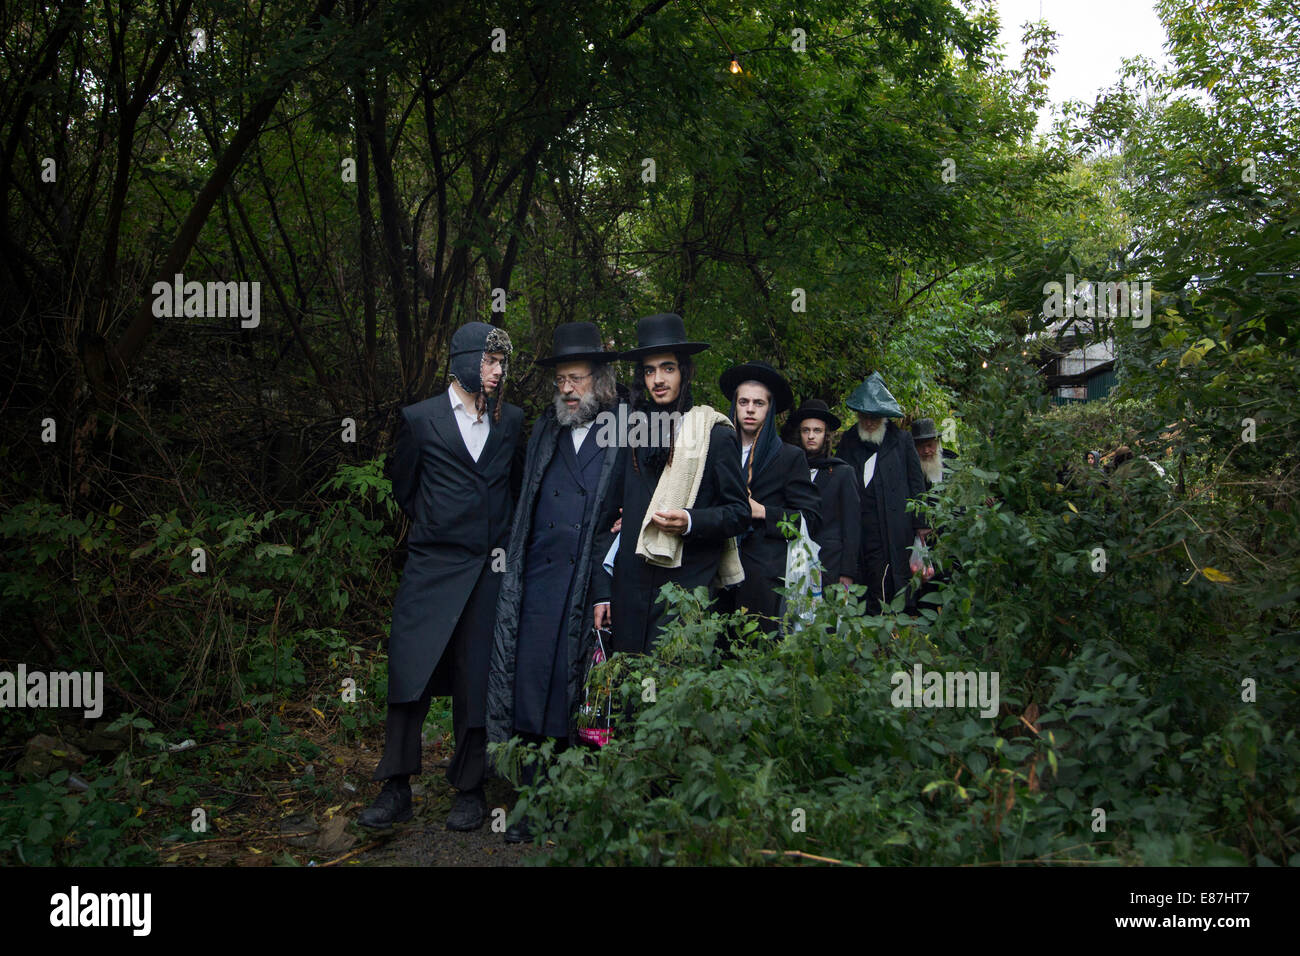 Followers of the Breslov Hasidic Jewish movement make a yearly pilgrimage to Uman Ukraine to visit the grave of Rabbi Nachman. Stock Photo